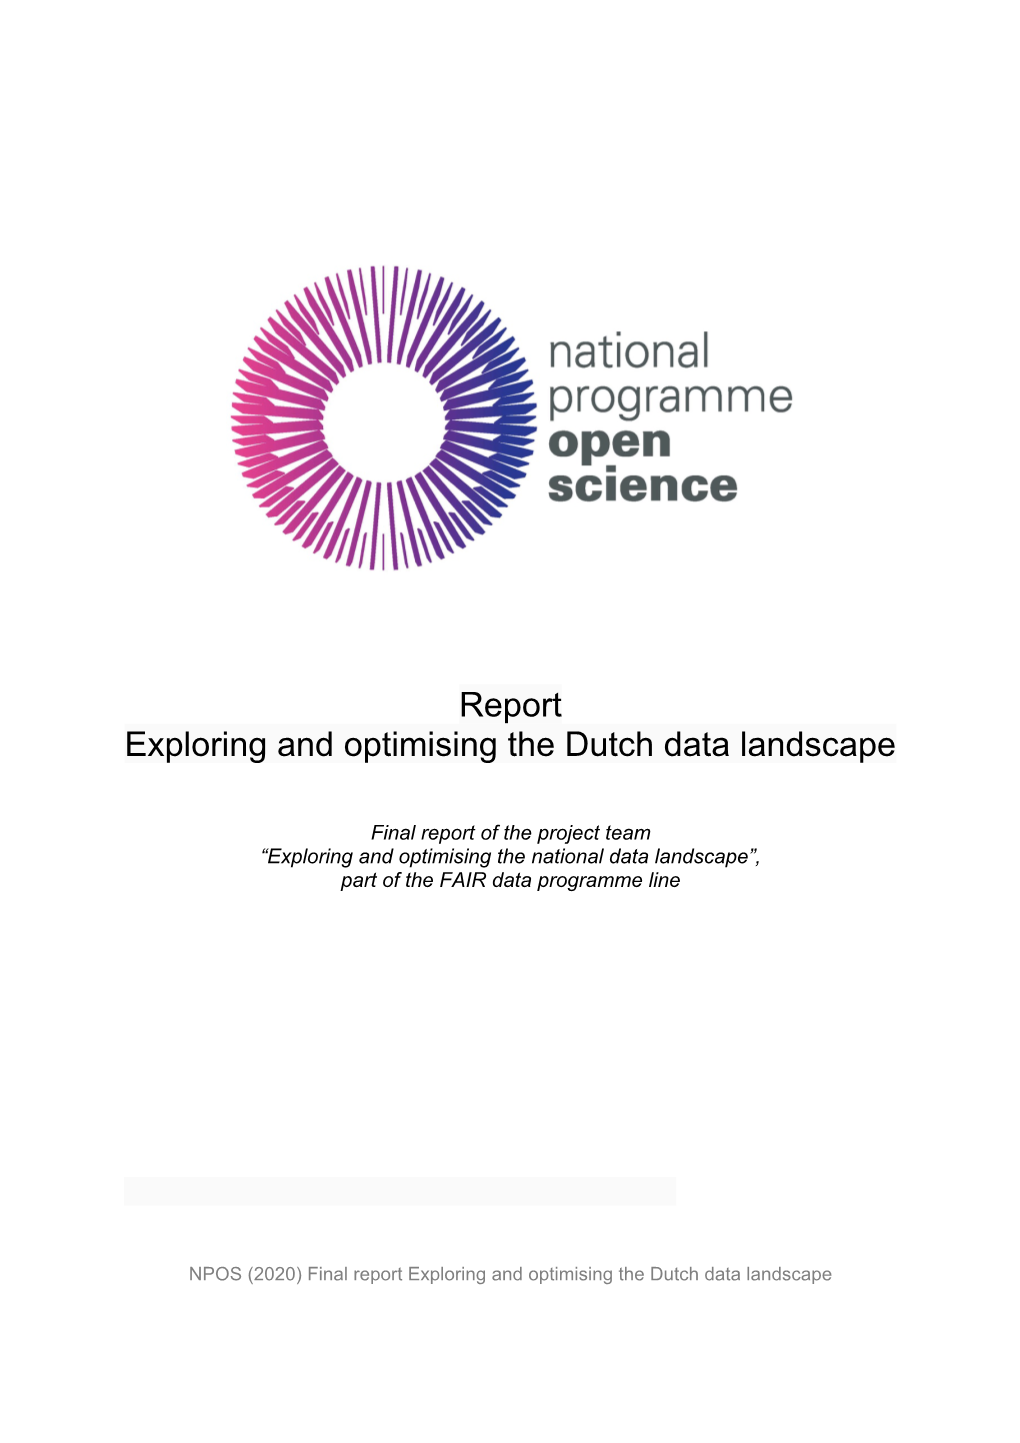 NPOS Final Report Exploring and Optimising the Dutch Data Landscape